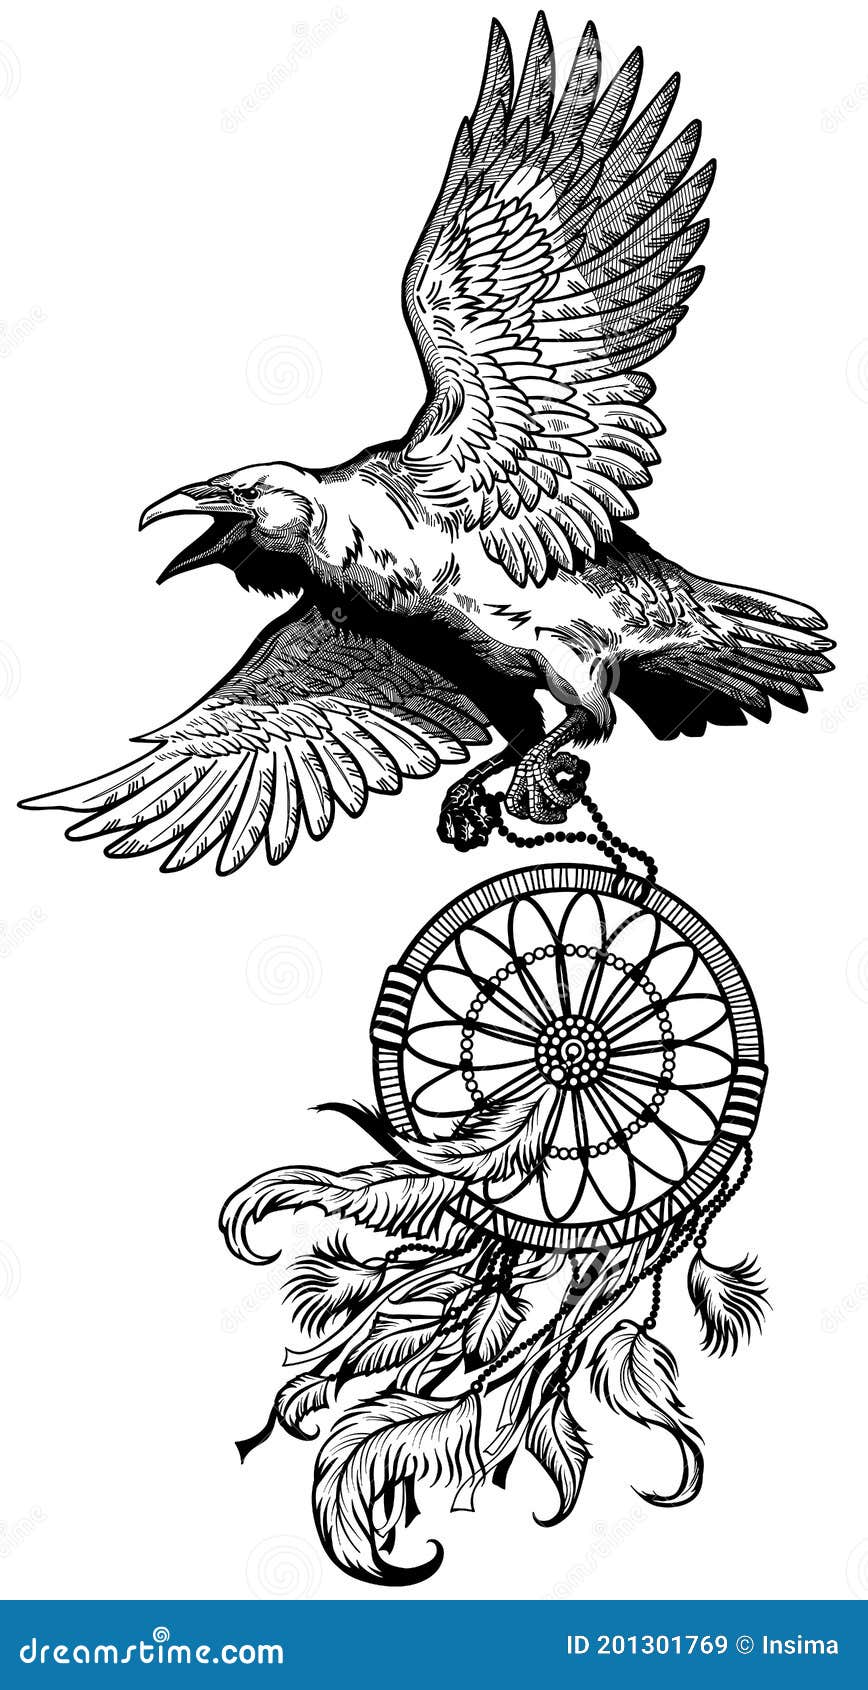 Raven at 1st Revelation | Dreamcatcher tattoo, Tattoos, Ink